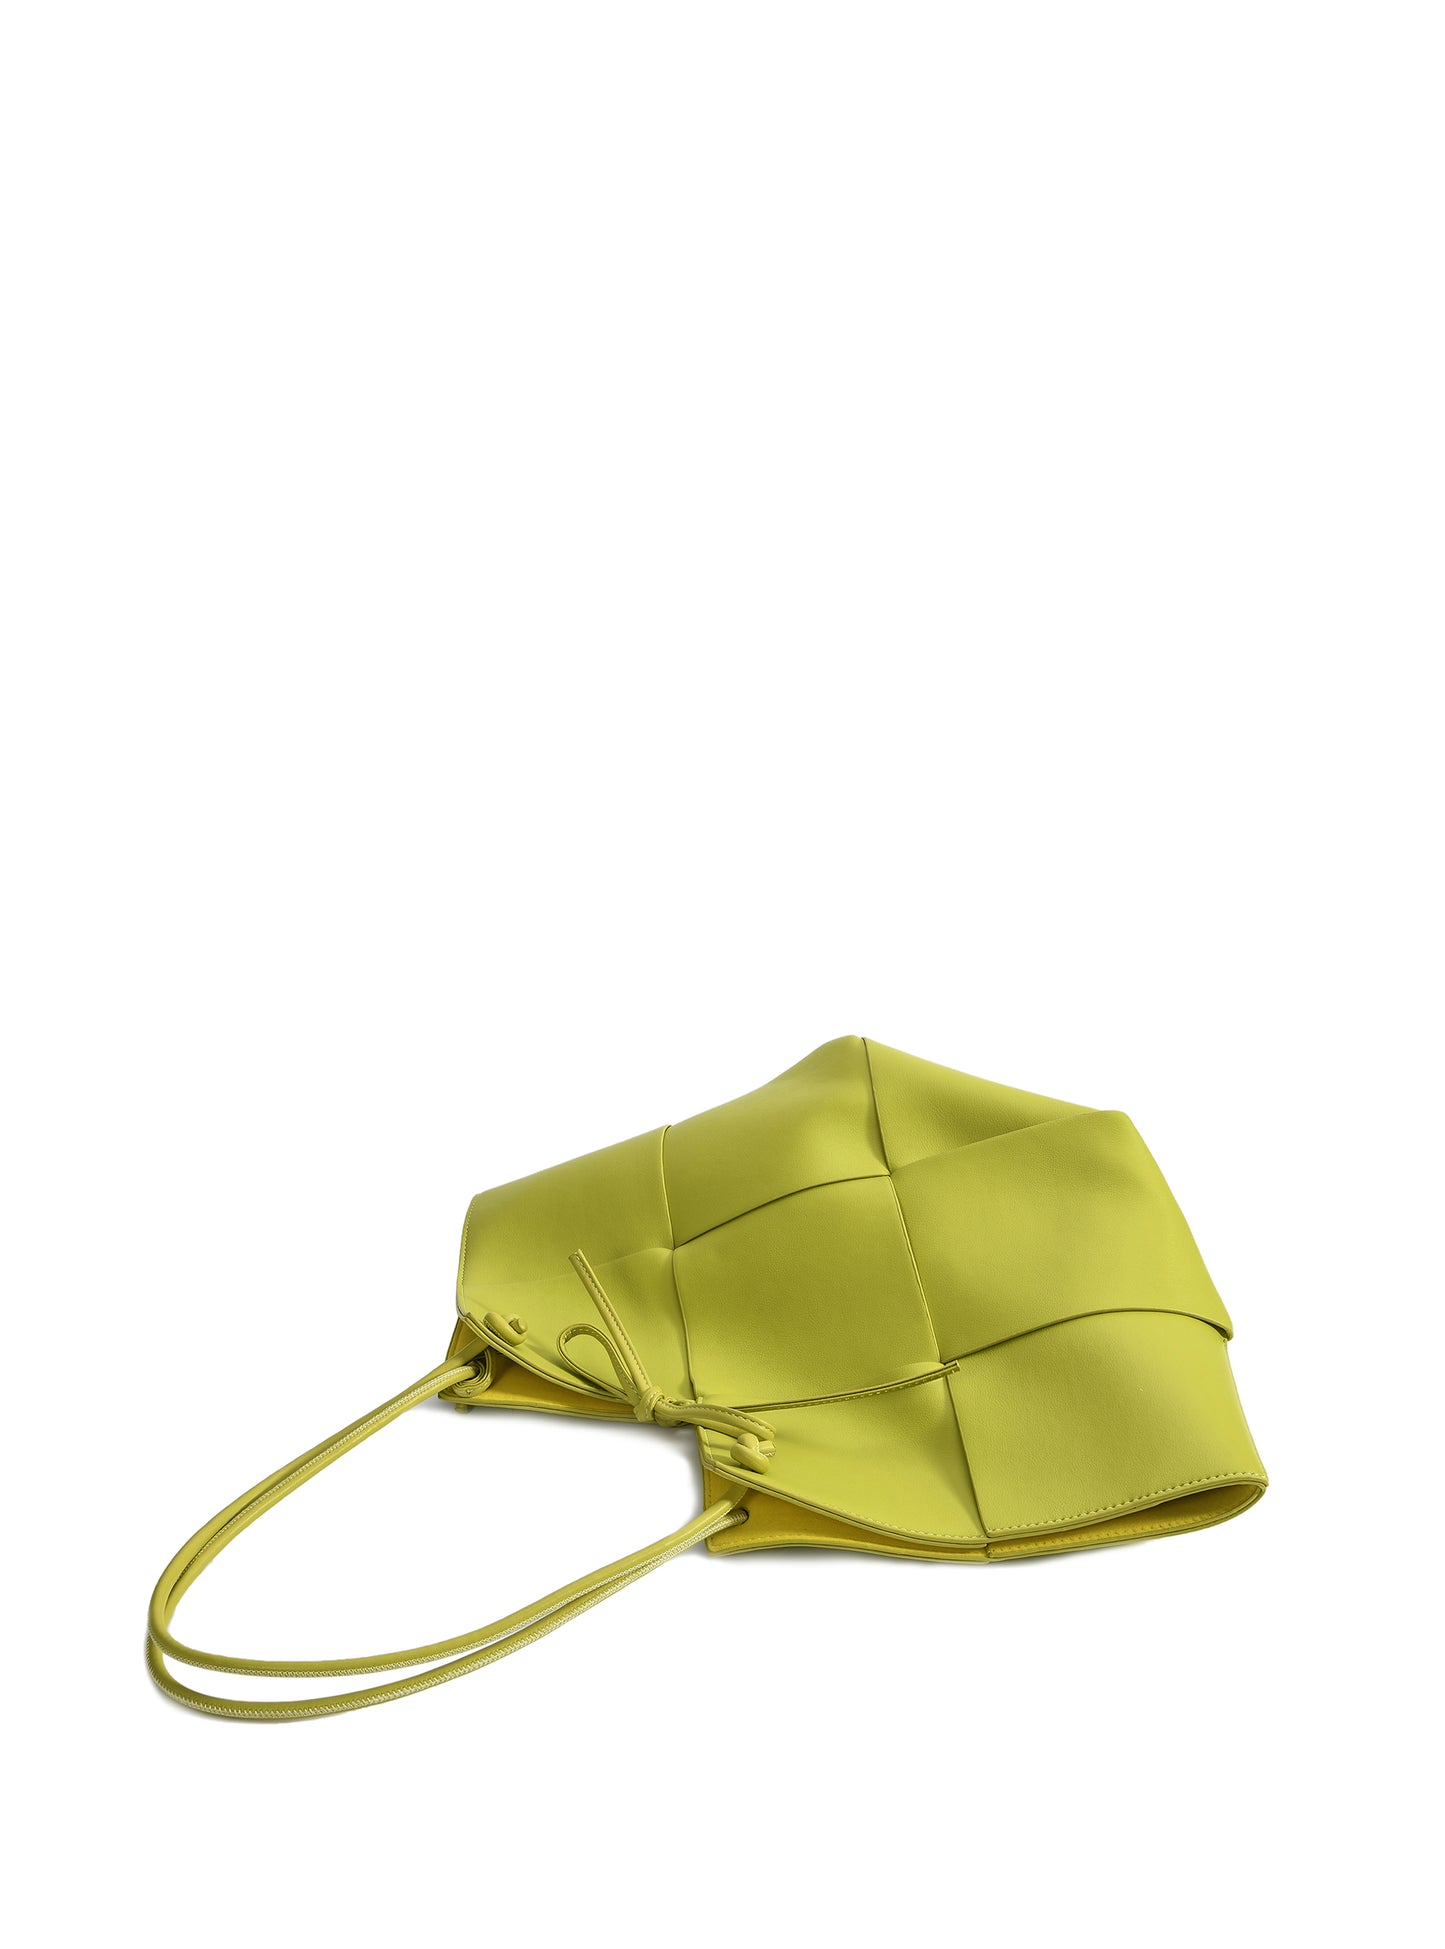 Taylor Contexture Leather Bag, Kiwi Green